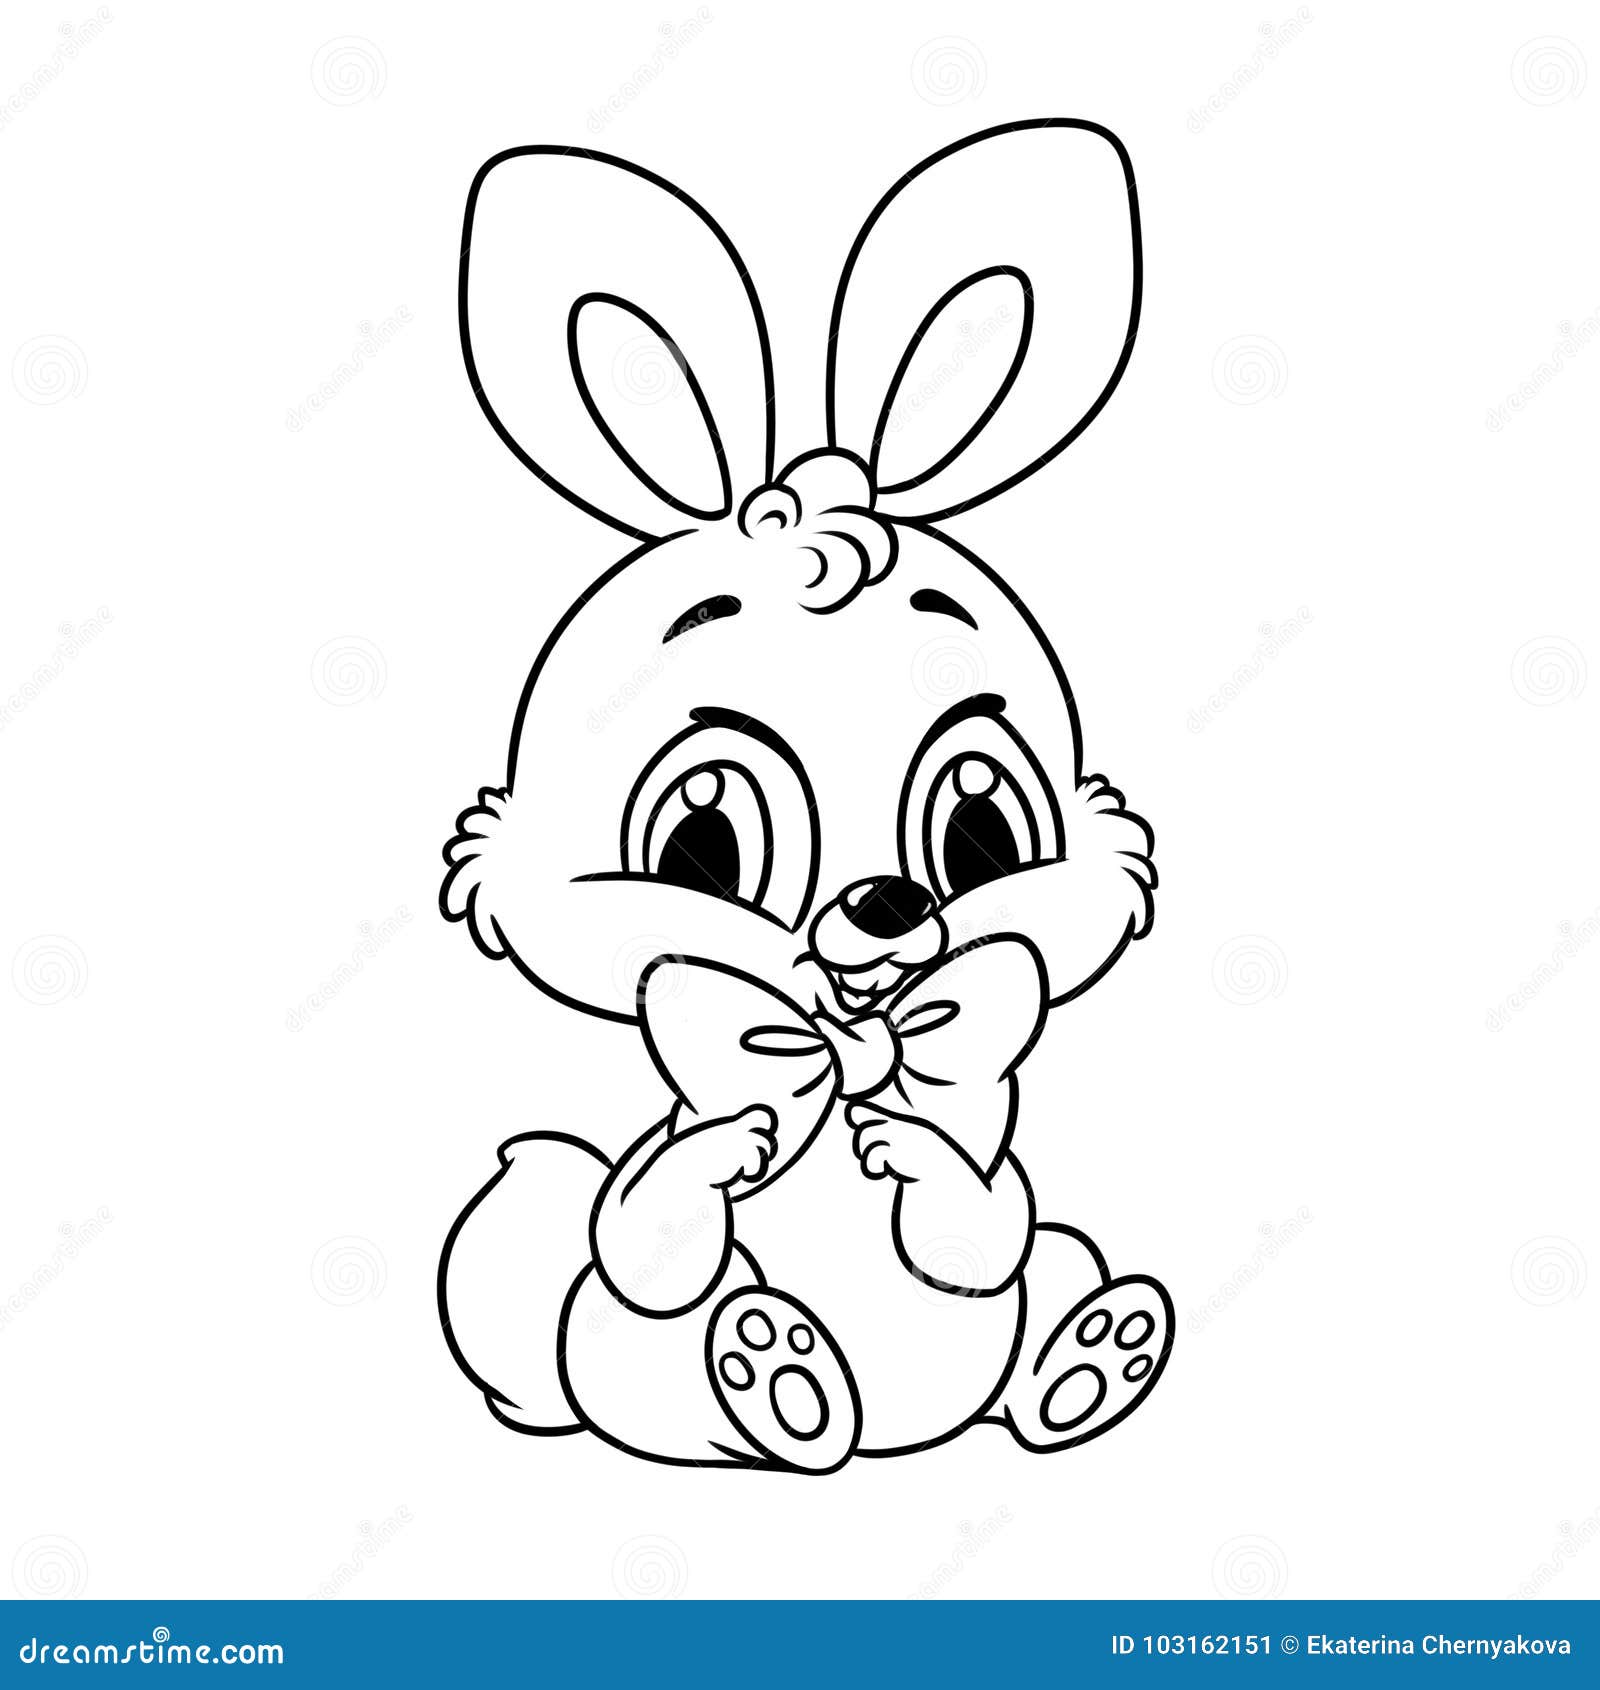 Rabbit Coloring Page Cartoon Illustration Stock Illustration ...